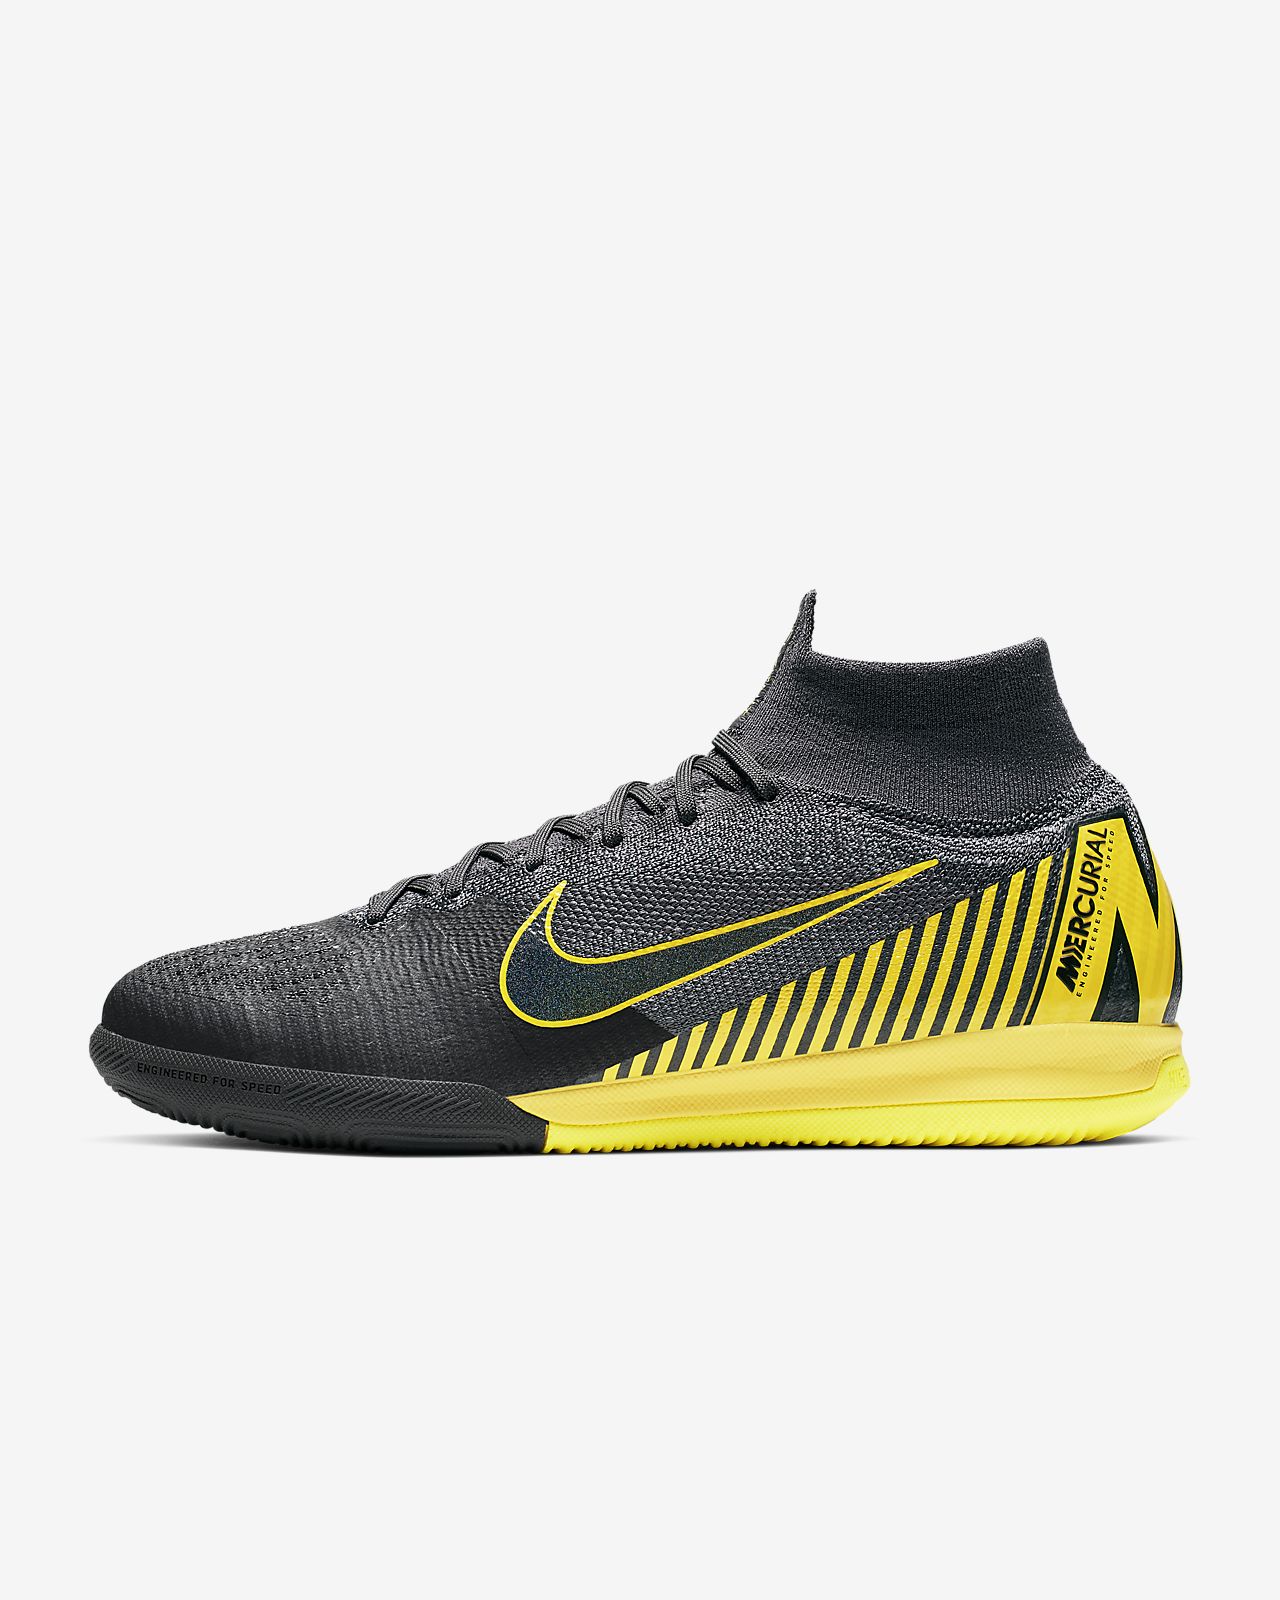 nike phantom vsn pro fg Nike Football Shoes Cleats for sale